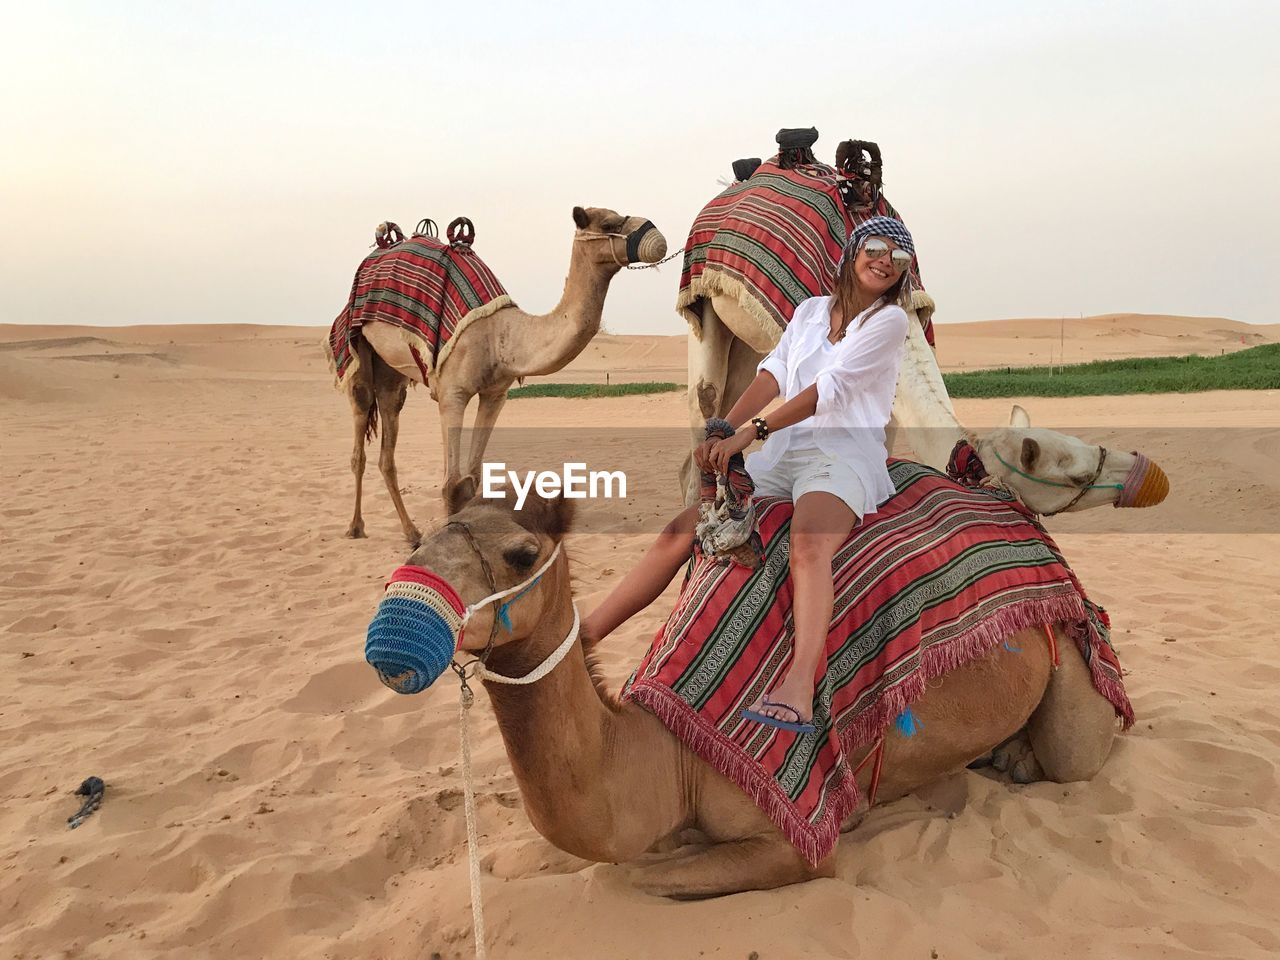 People riding camel in desert